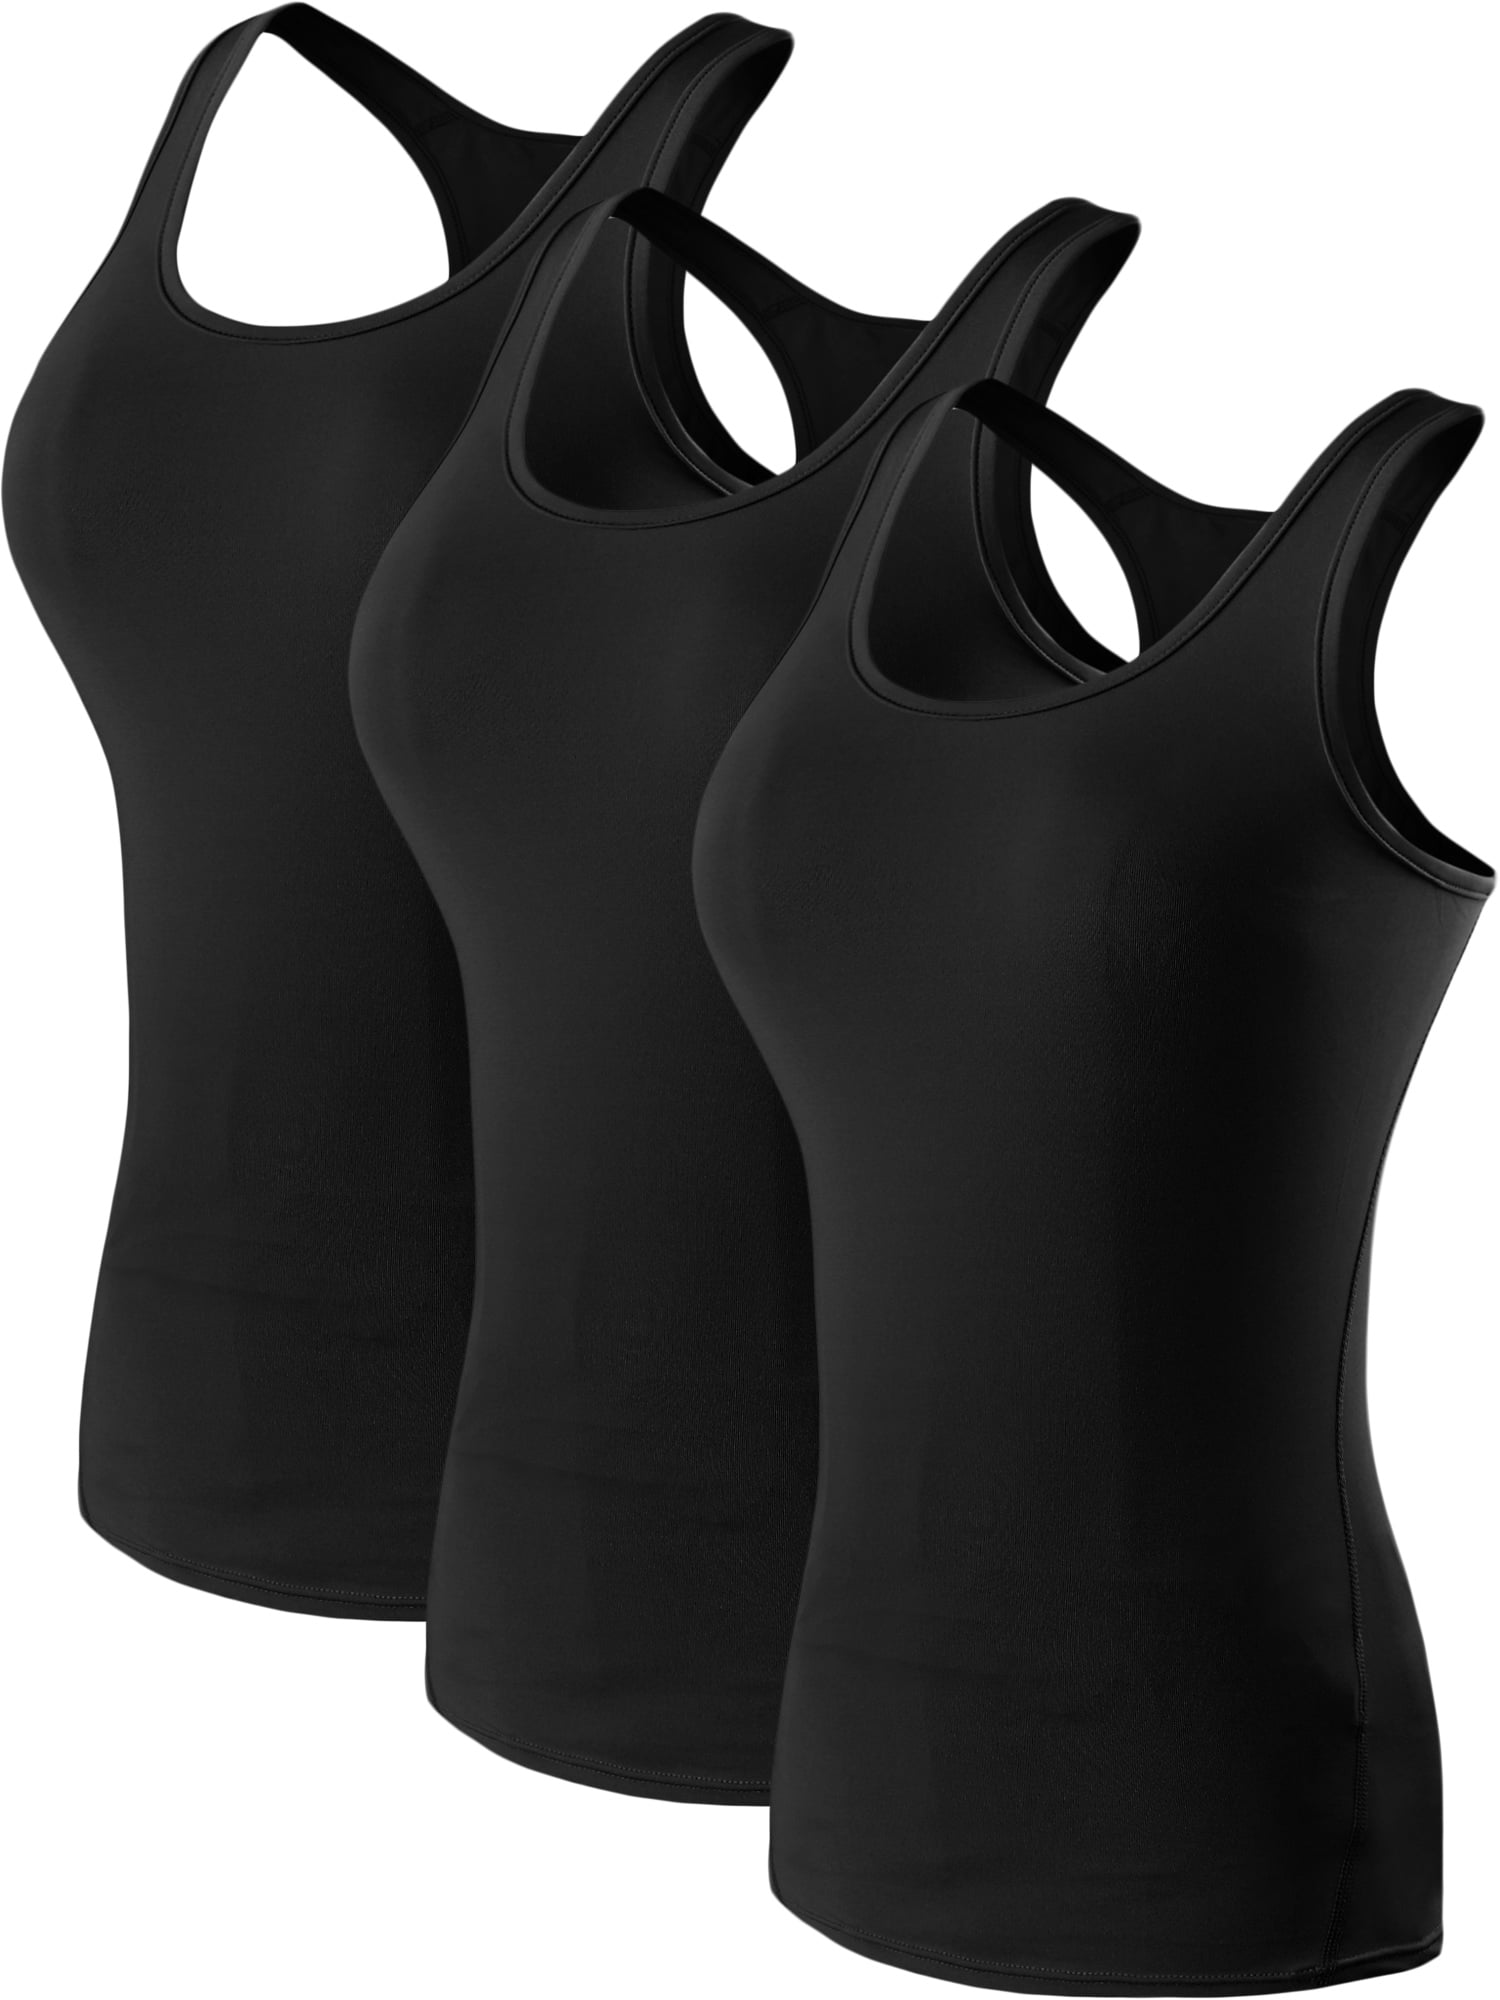 NELEUS Womens Compression Base Layer Dry Fit Tank Top 3 Pack,Black,US Size L